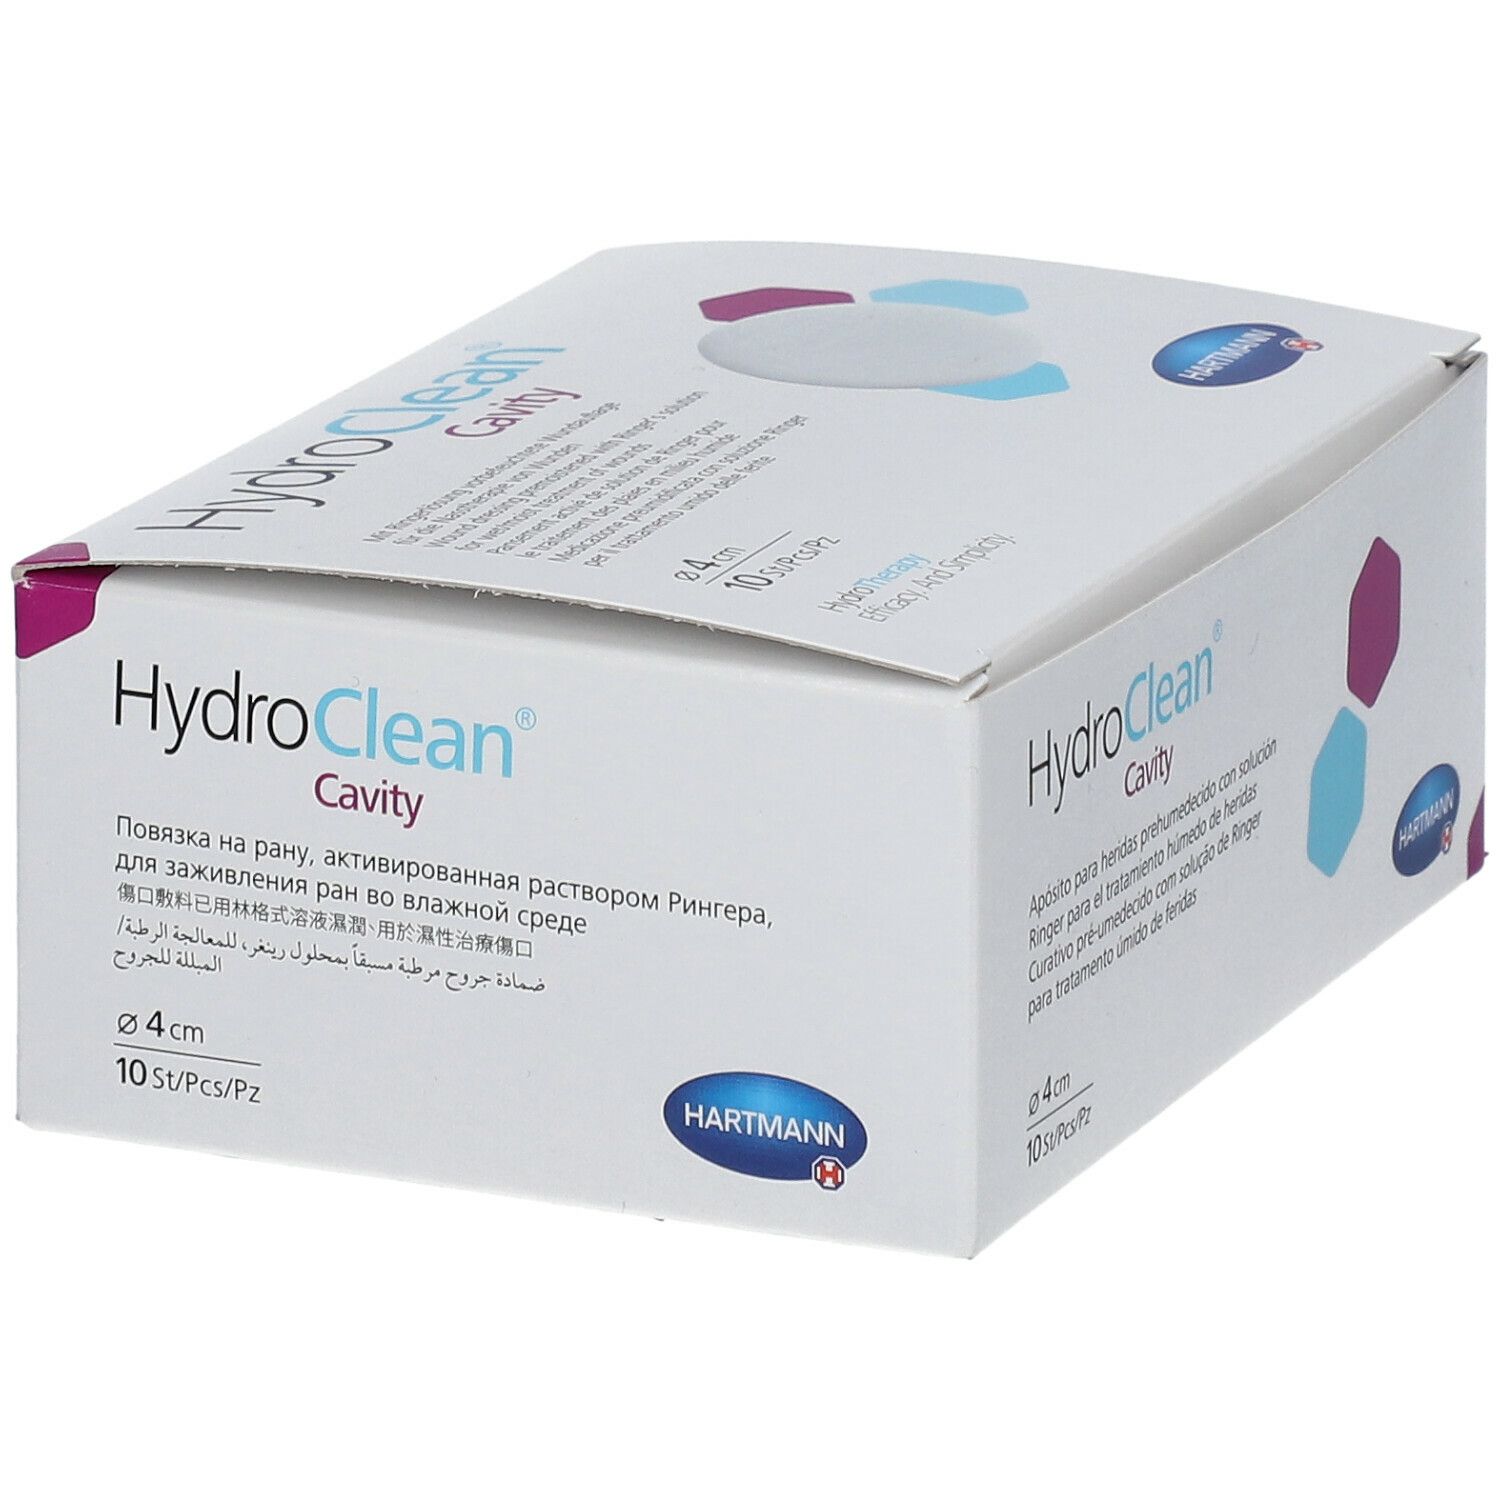 HydroClean® Cavity 4cm rund